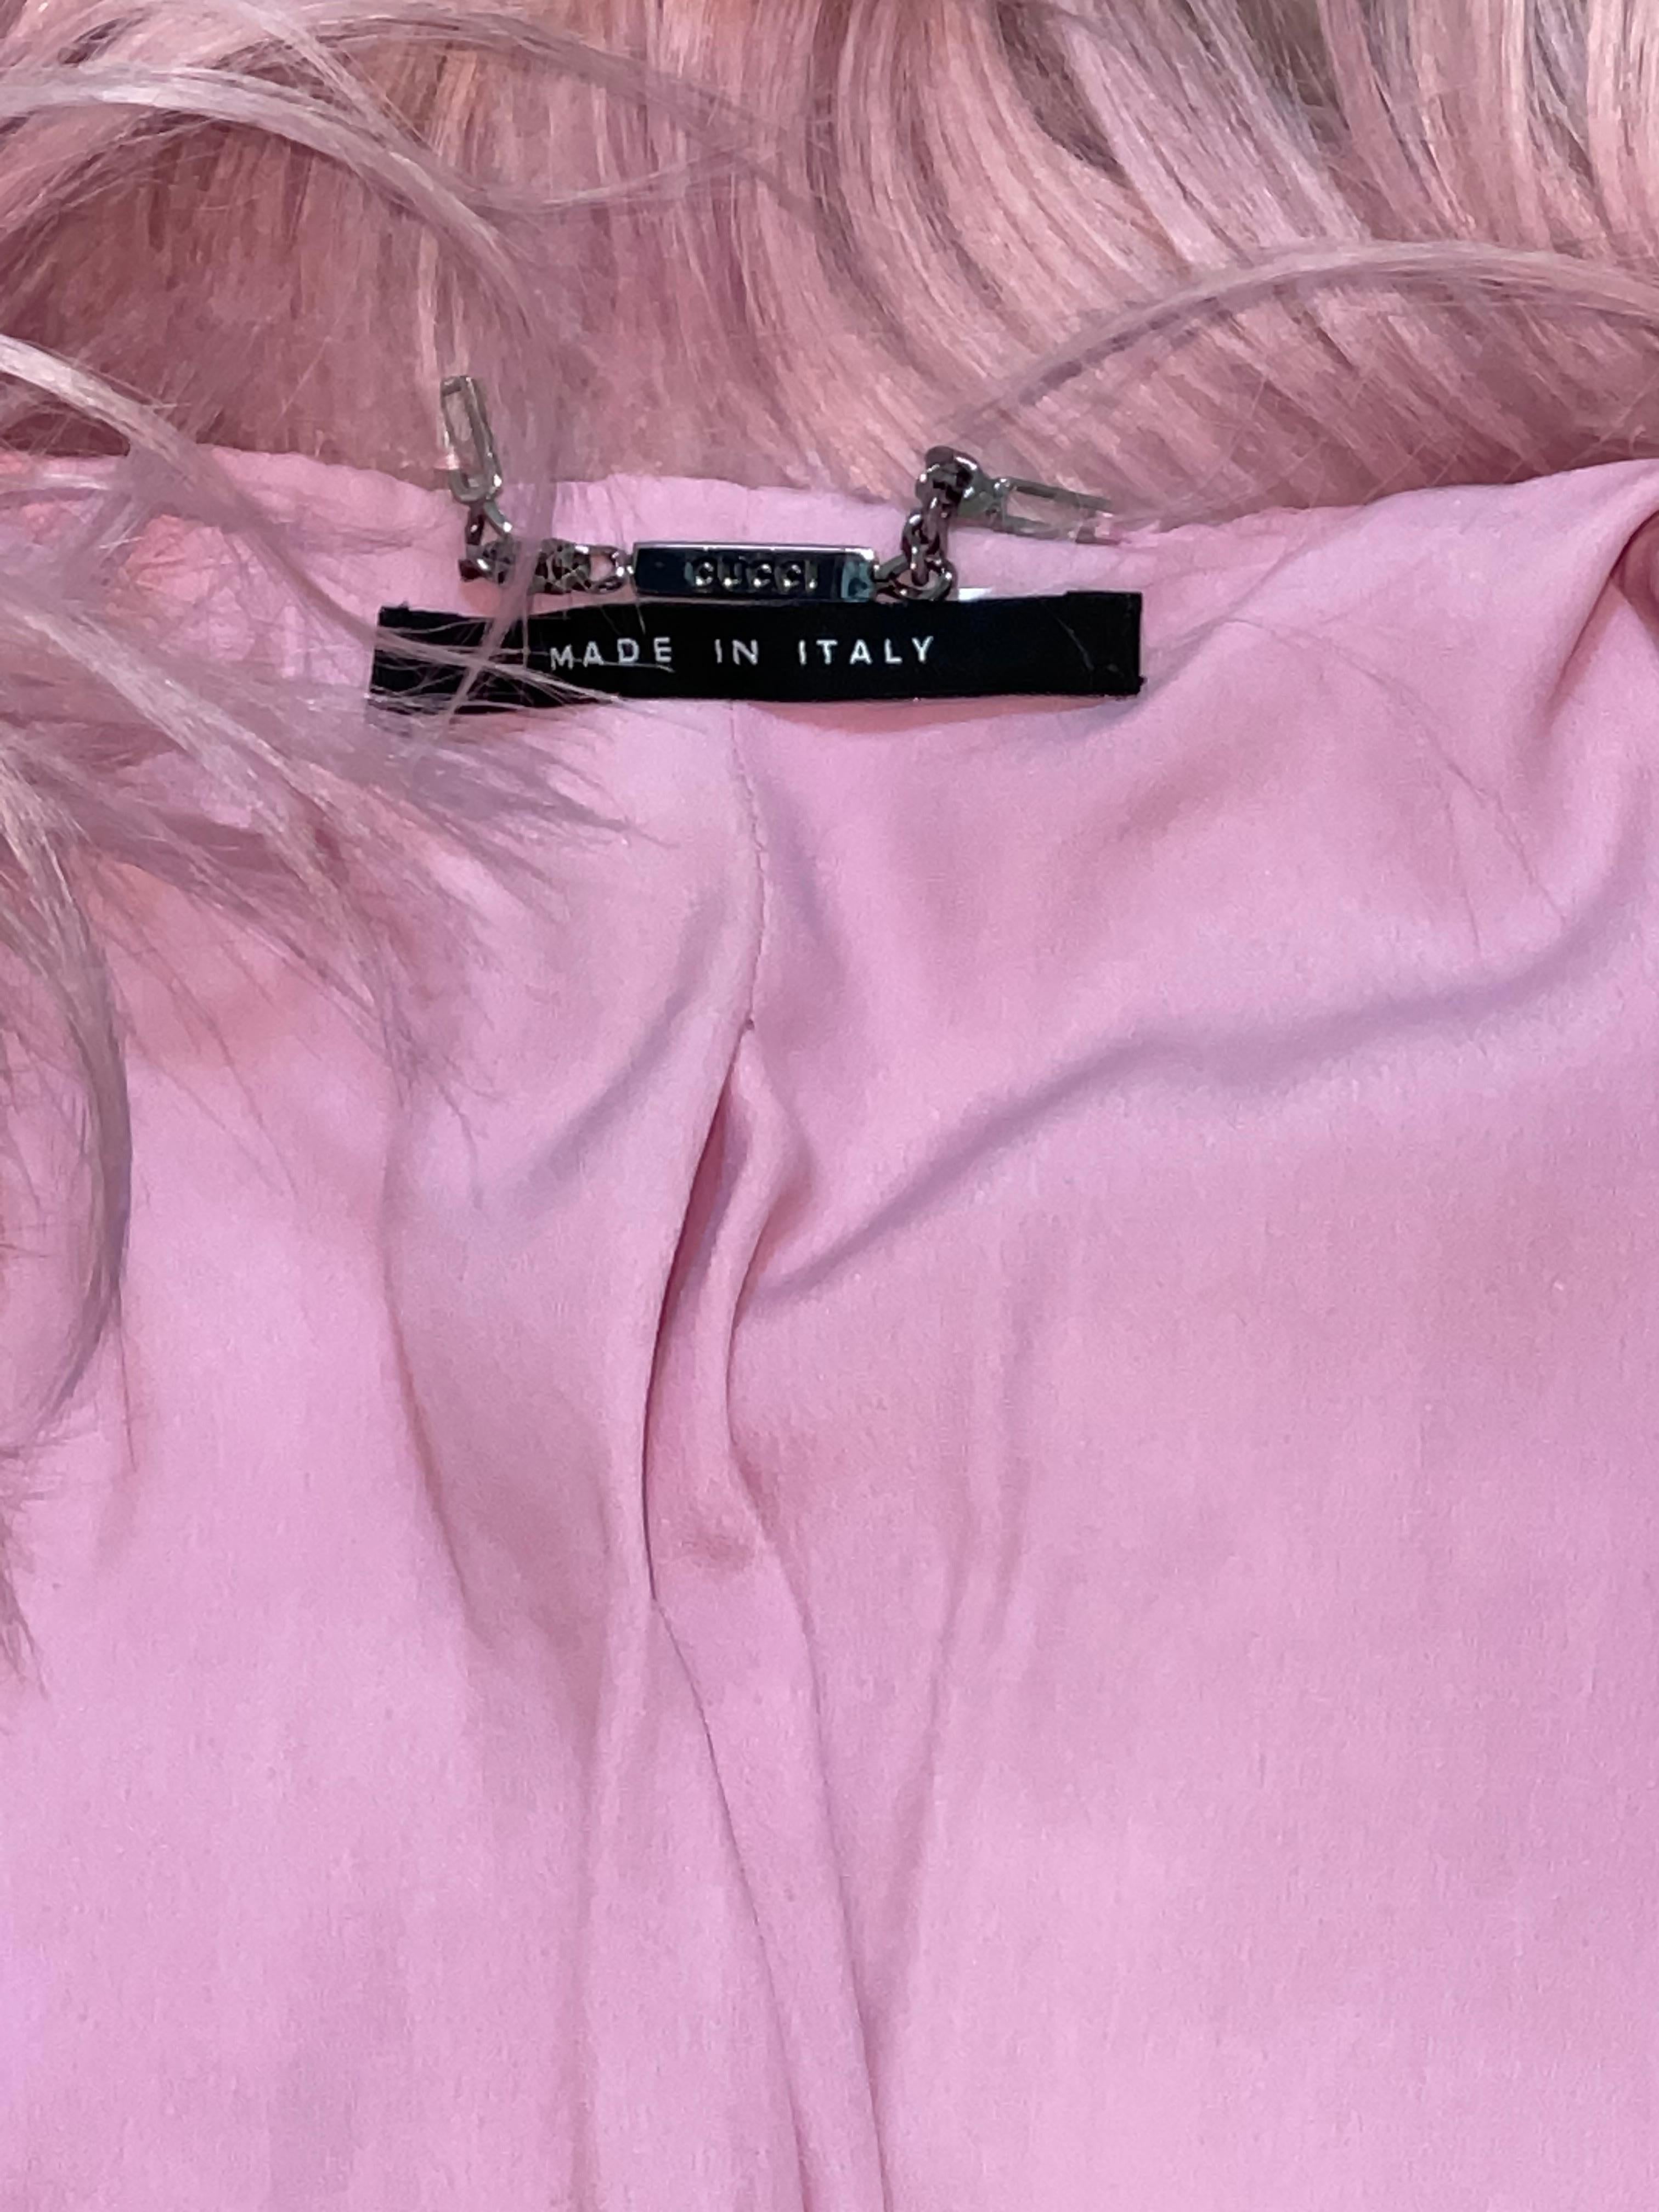 Women's F/W 2001 Gucci by Tom Ford Runway Kidassia Pastel Pink Fur Jacket Coat